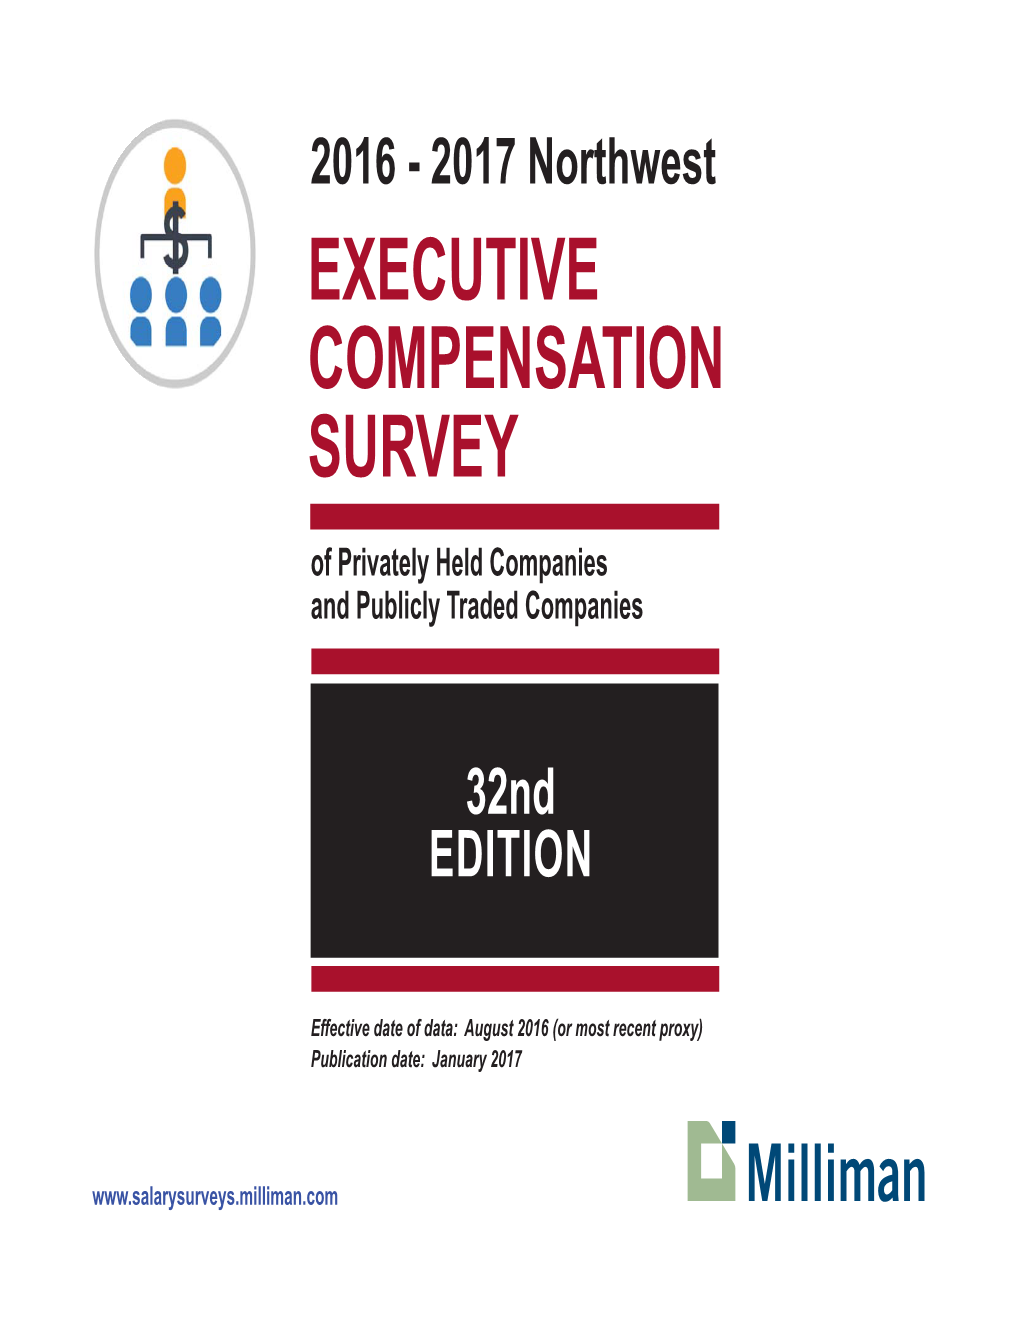 Executive Compensation Survey